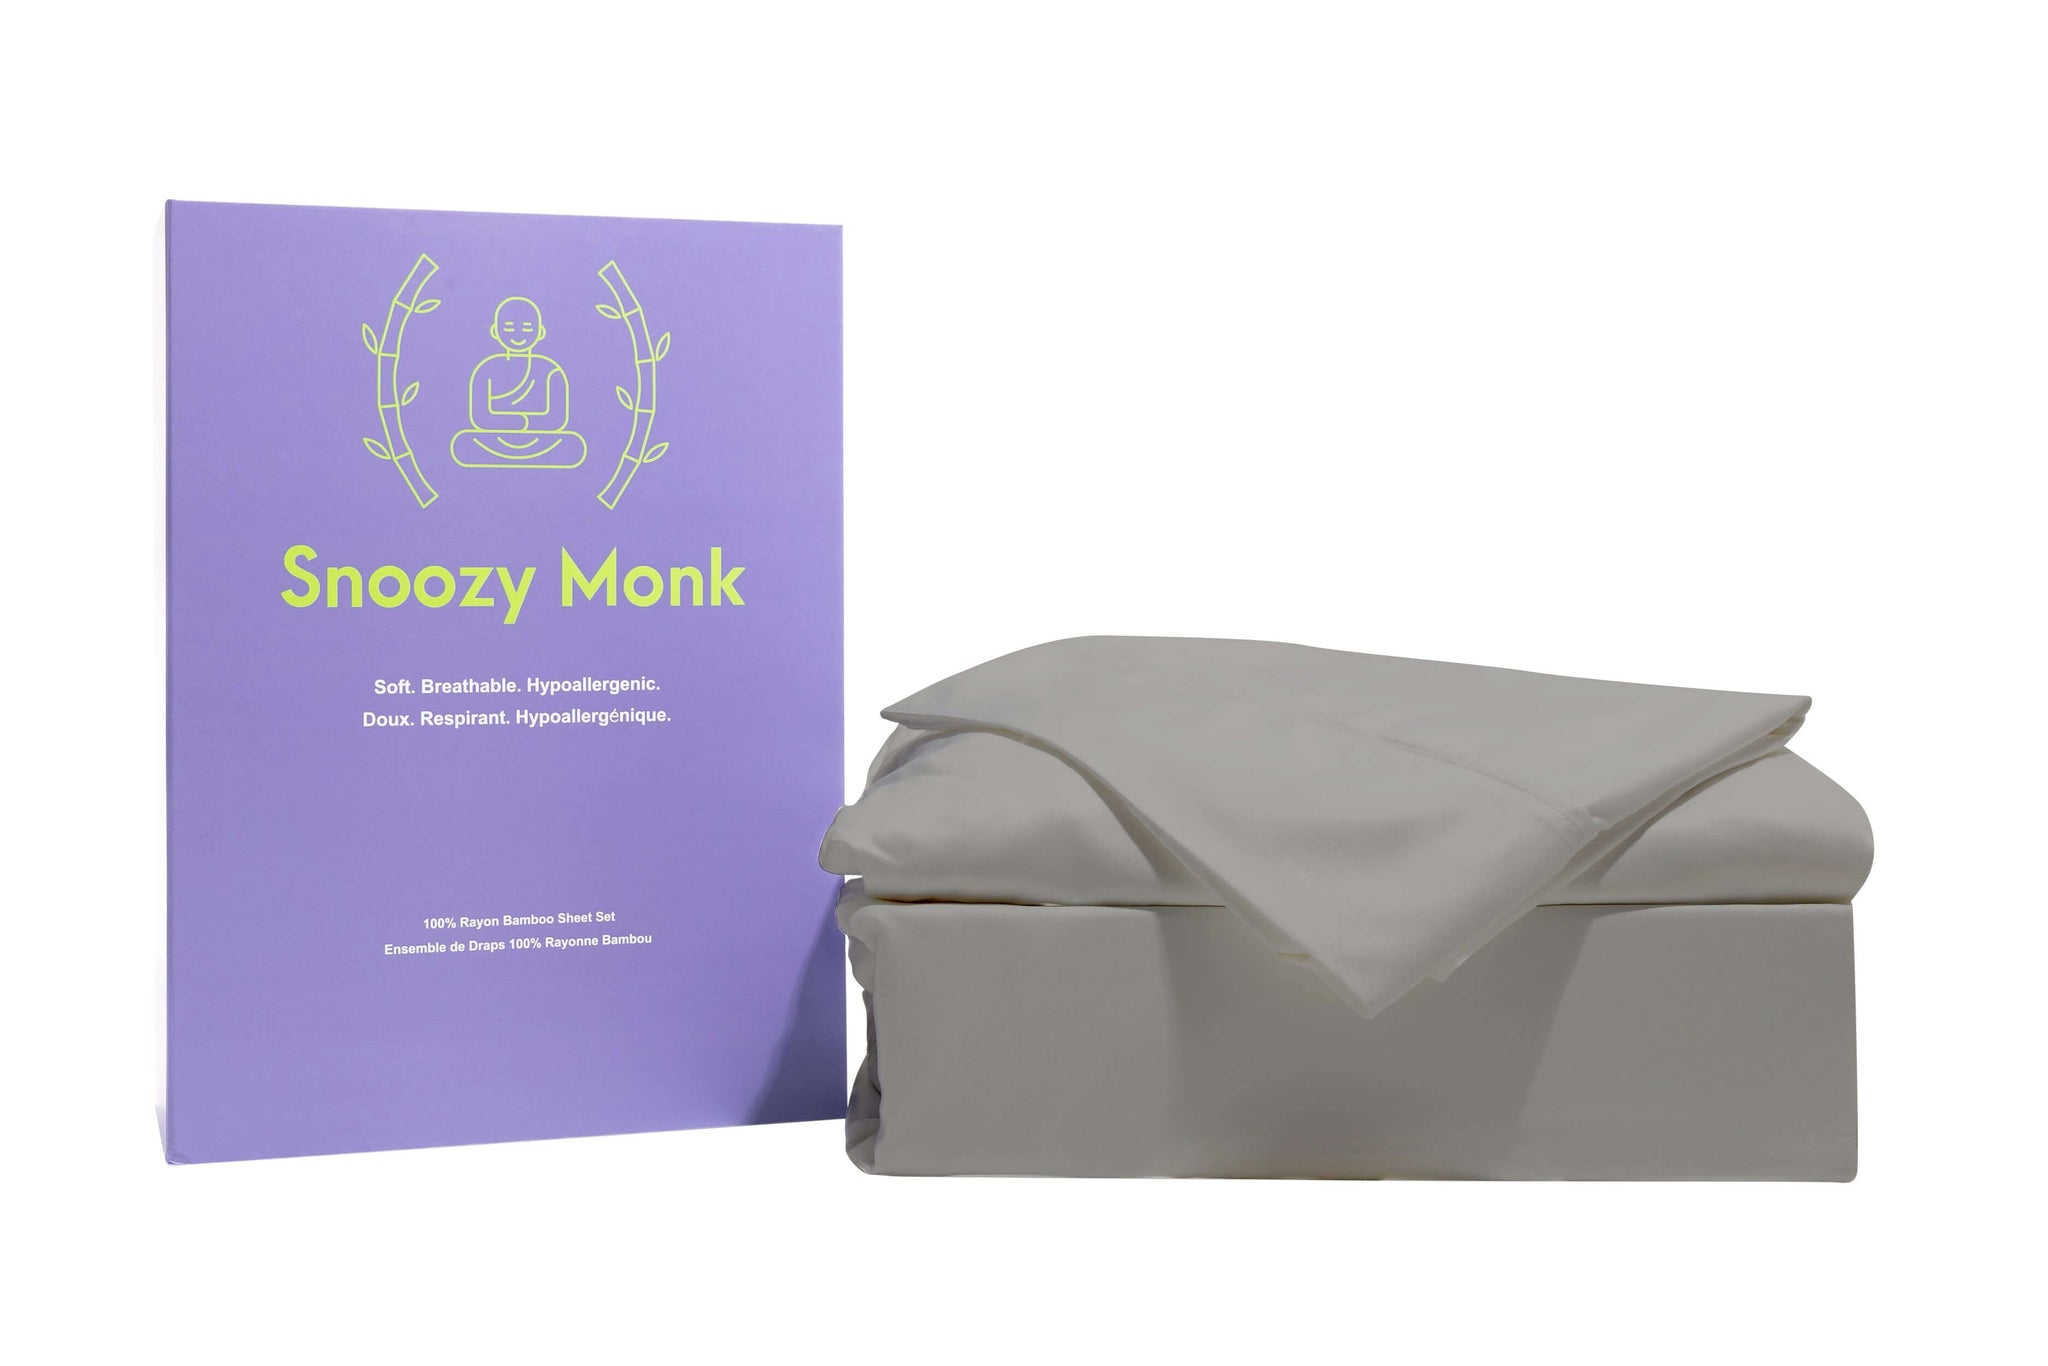 A grey Snoozy Monk Rayon Bamboo Sheet Set with box